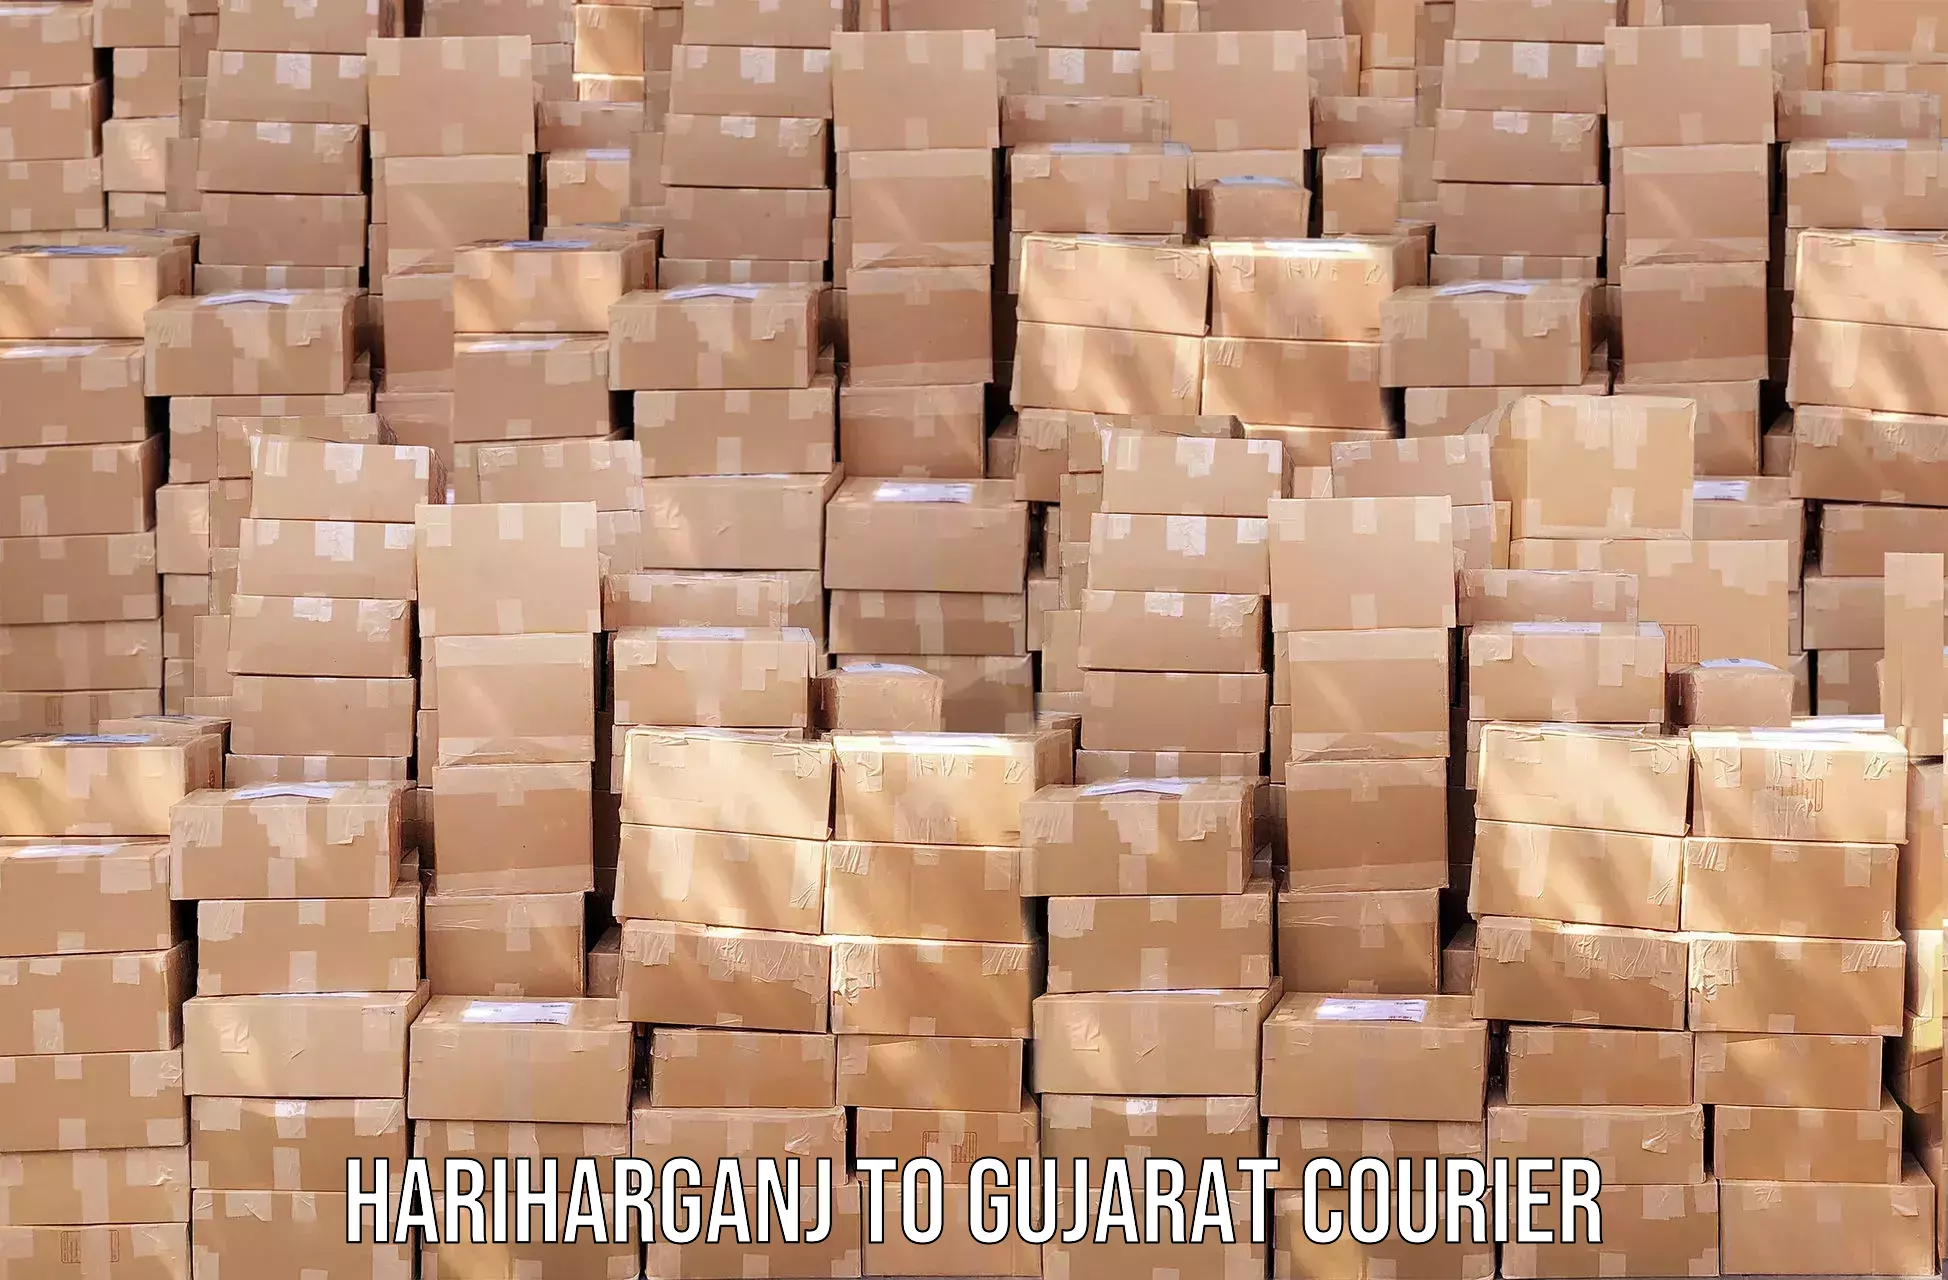 Courier service comparison Hariharganj to Gujarat